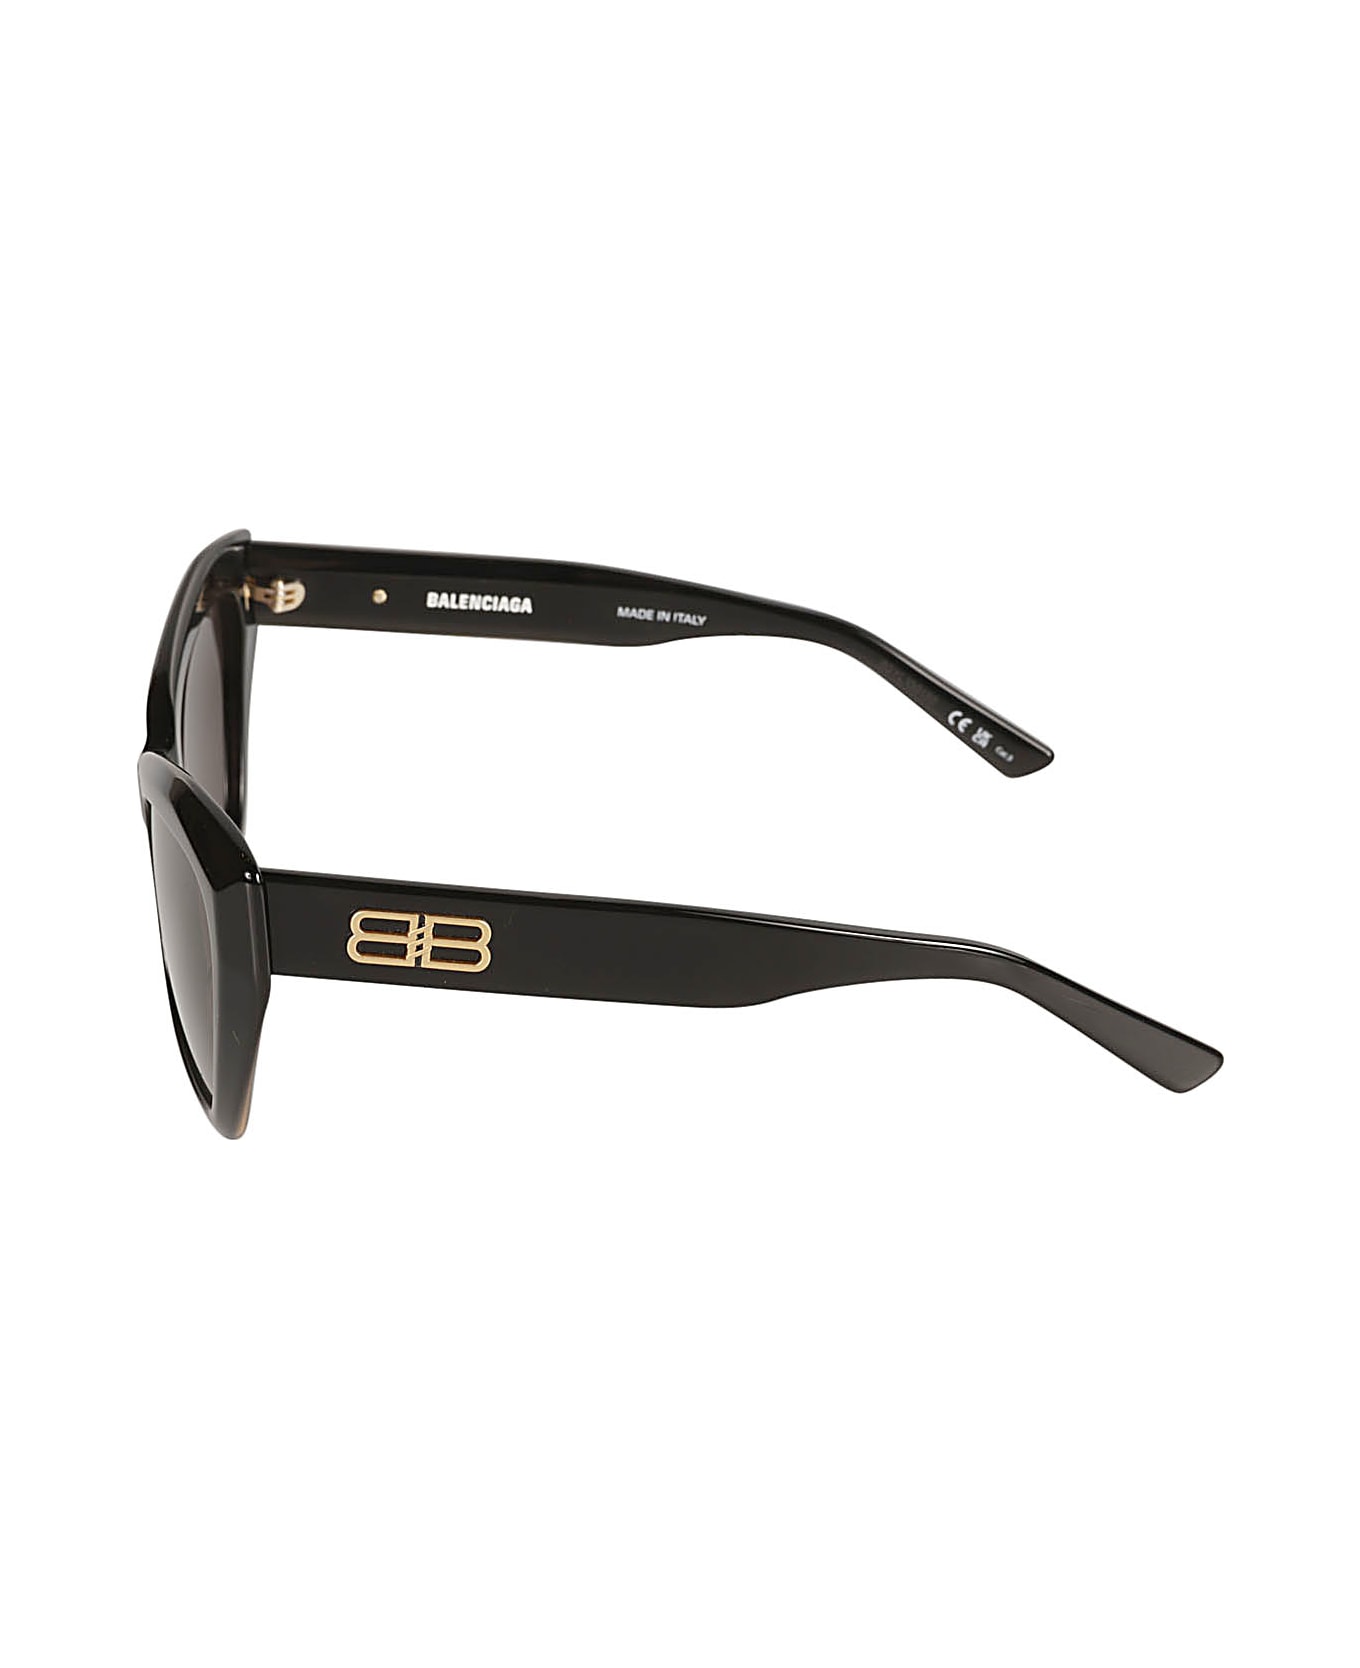 Balenciaga Eyewear Butterfly Frame Bb Plaque Sunglasses - Black/Grey